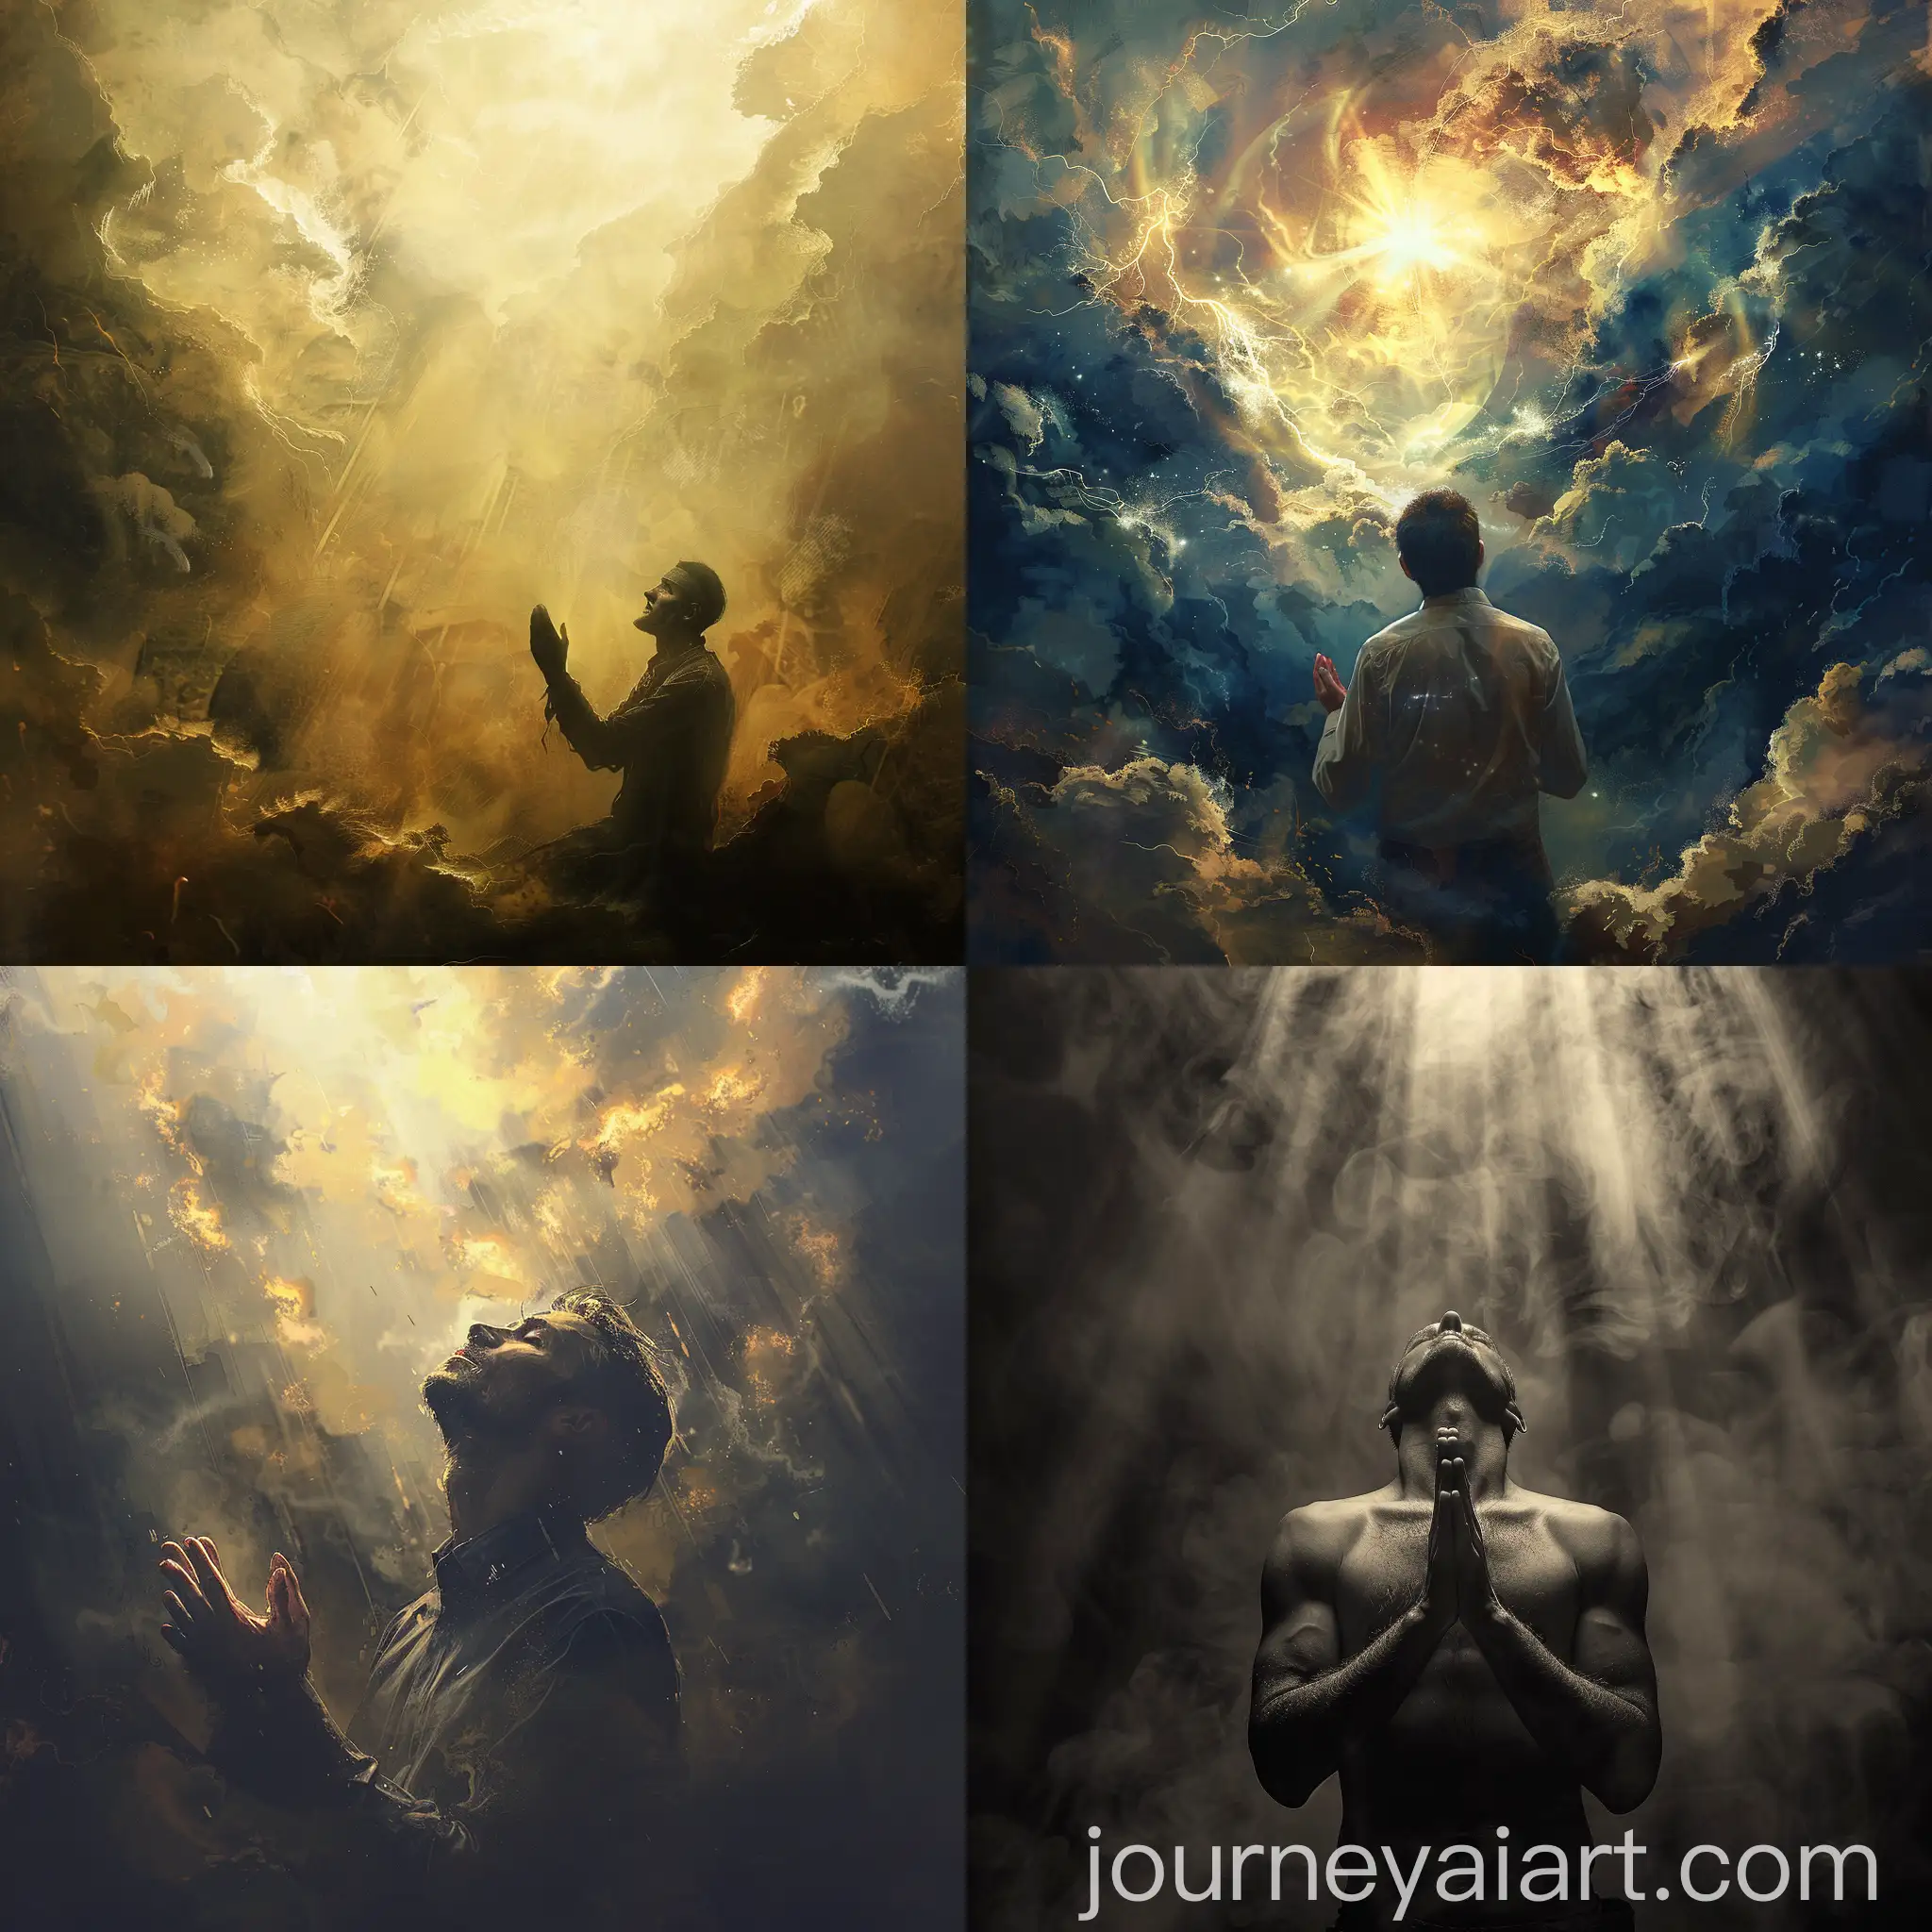 Man-Praying-with-Hands-Raised-to-Heaven-in-Spiritual-Light